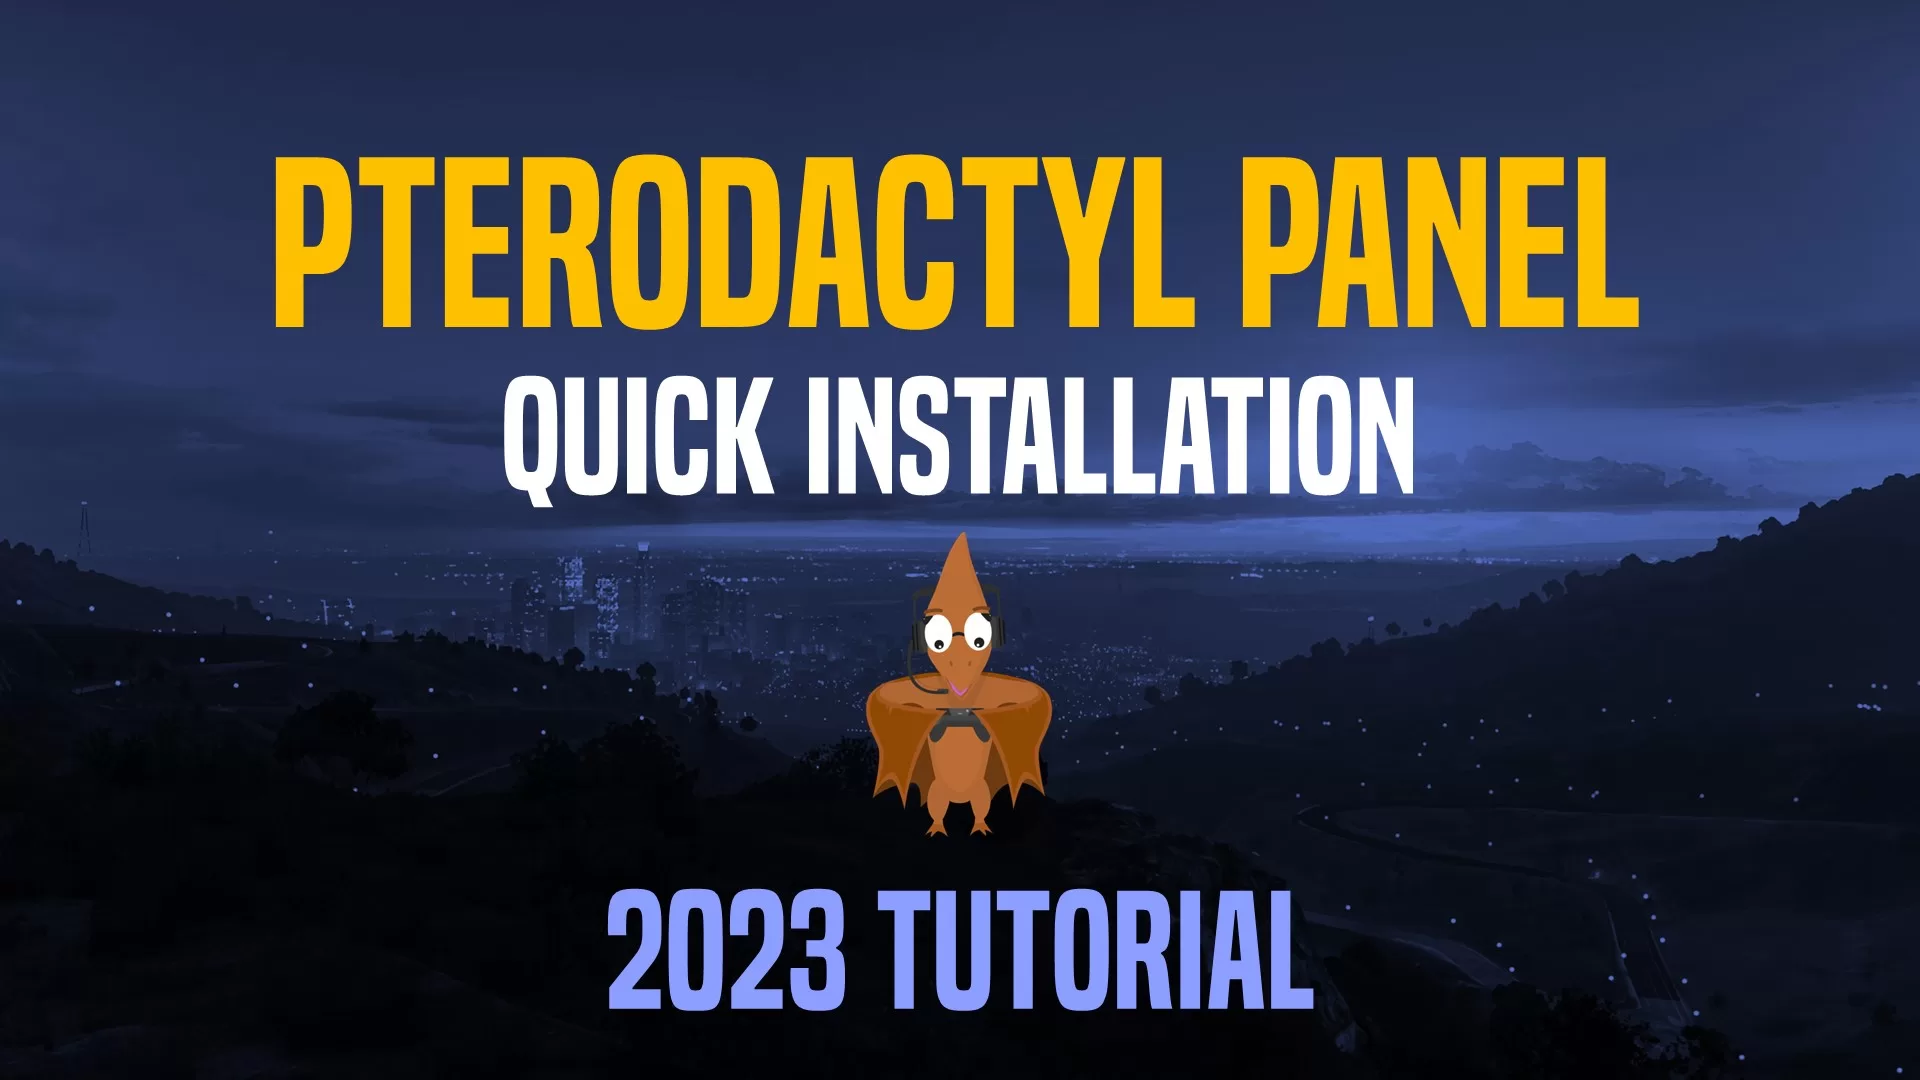 How to Install Pterodactyl Panel? - Yuvraj Verma